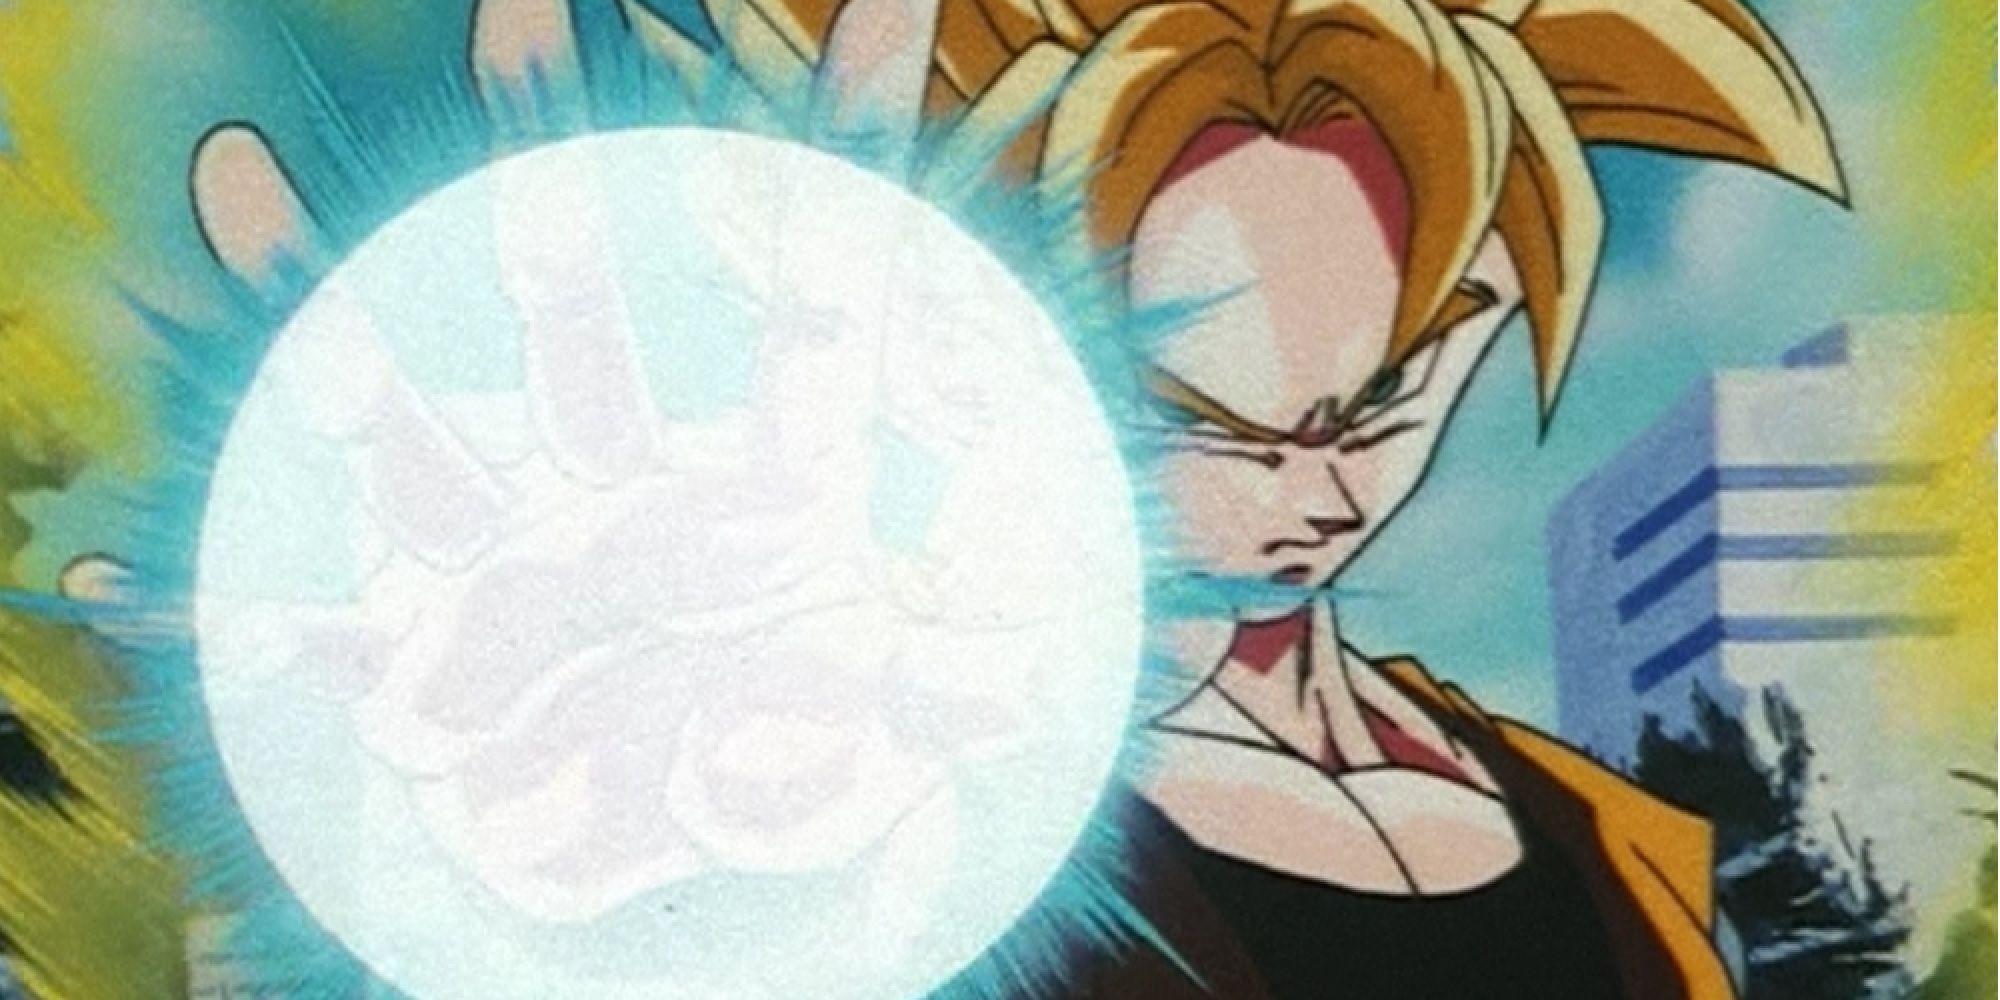 Super Saiyan 3 Goku with Ki Blast